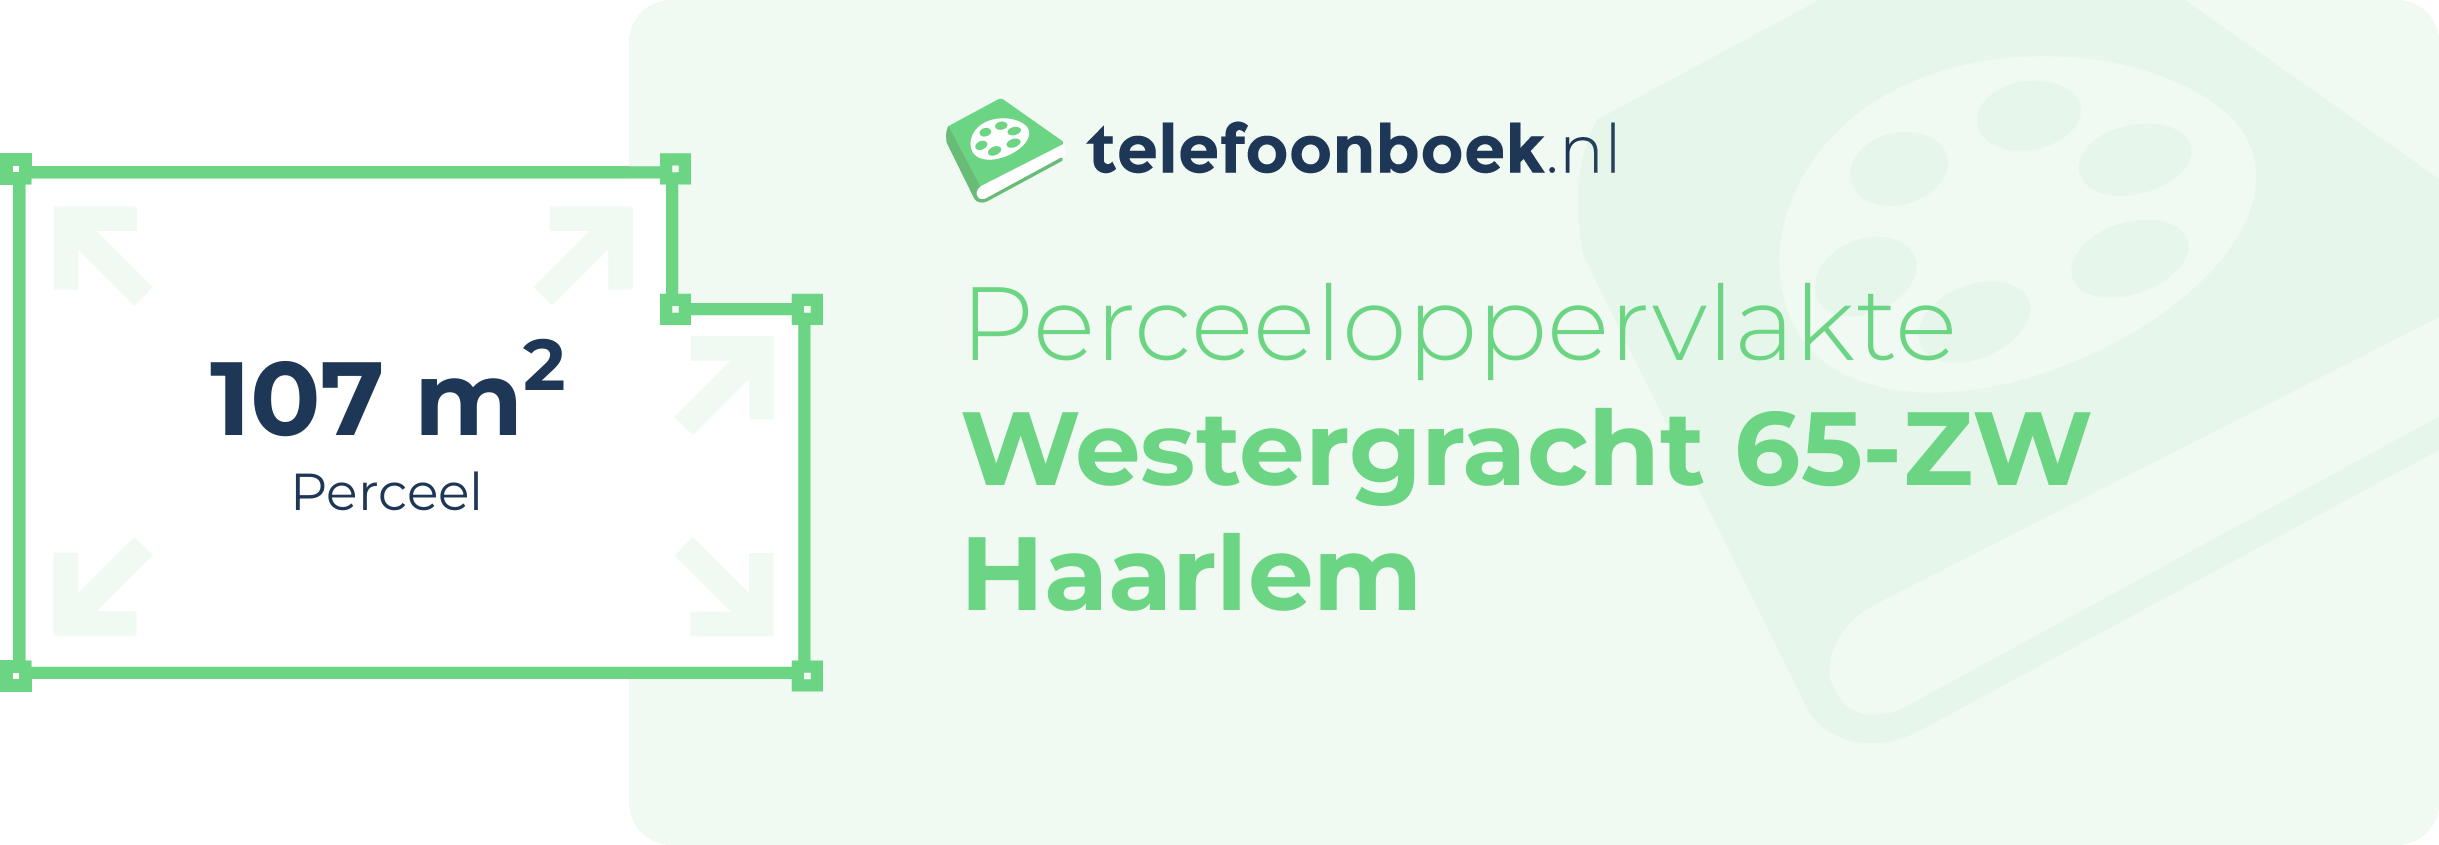 Perceeloppervlakte Westergracht 65-ZW Haarlem